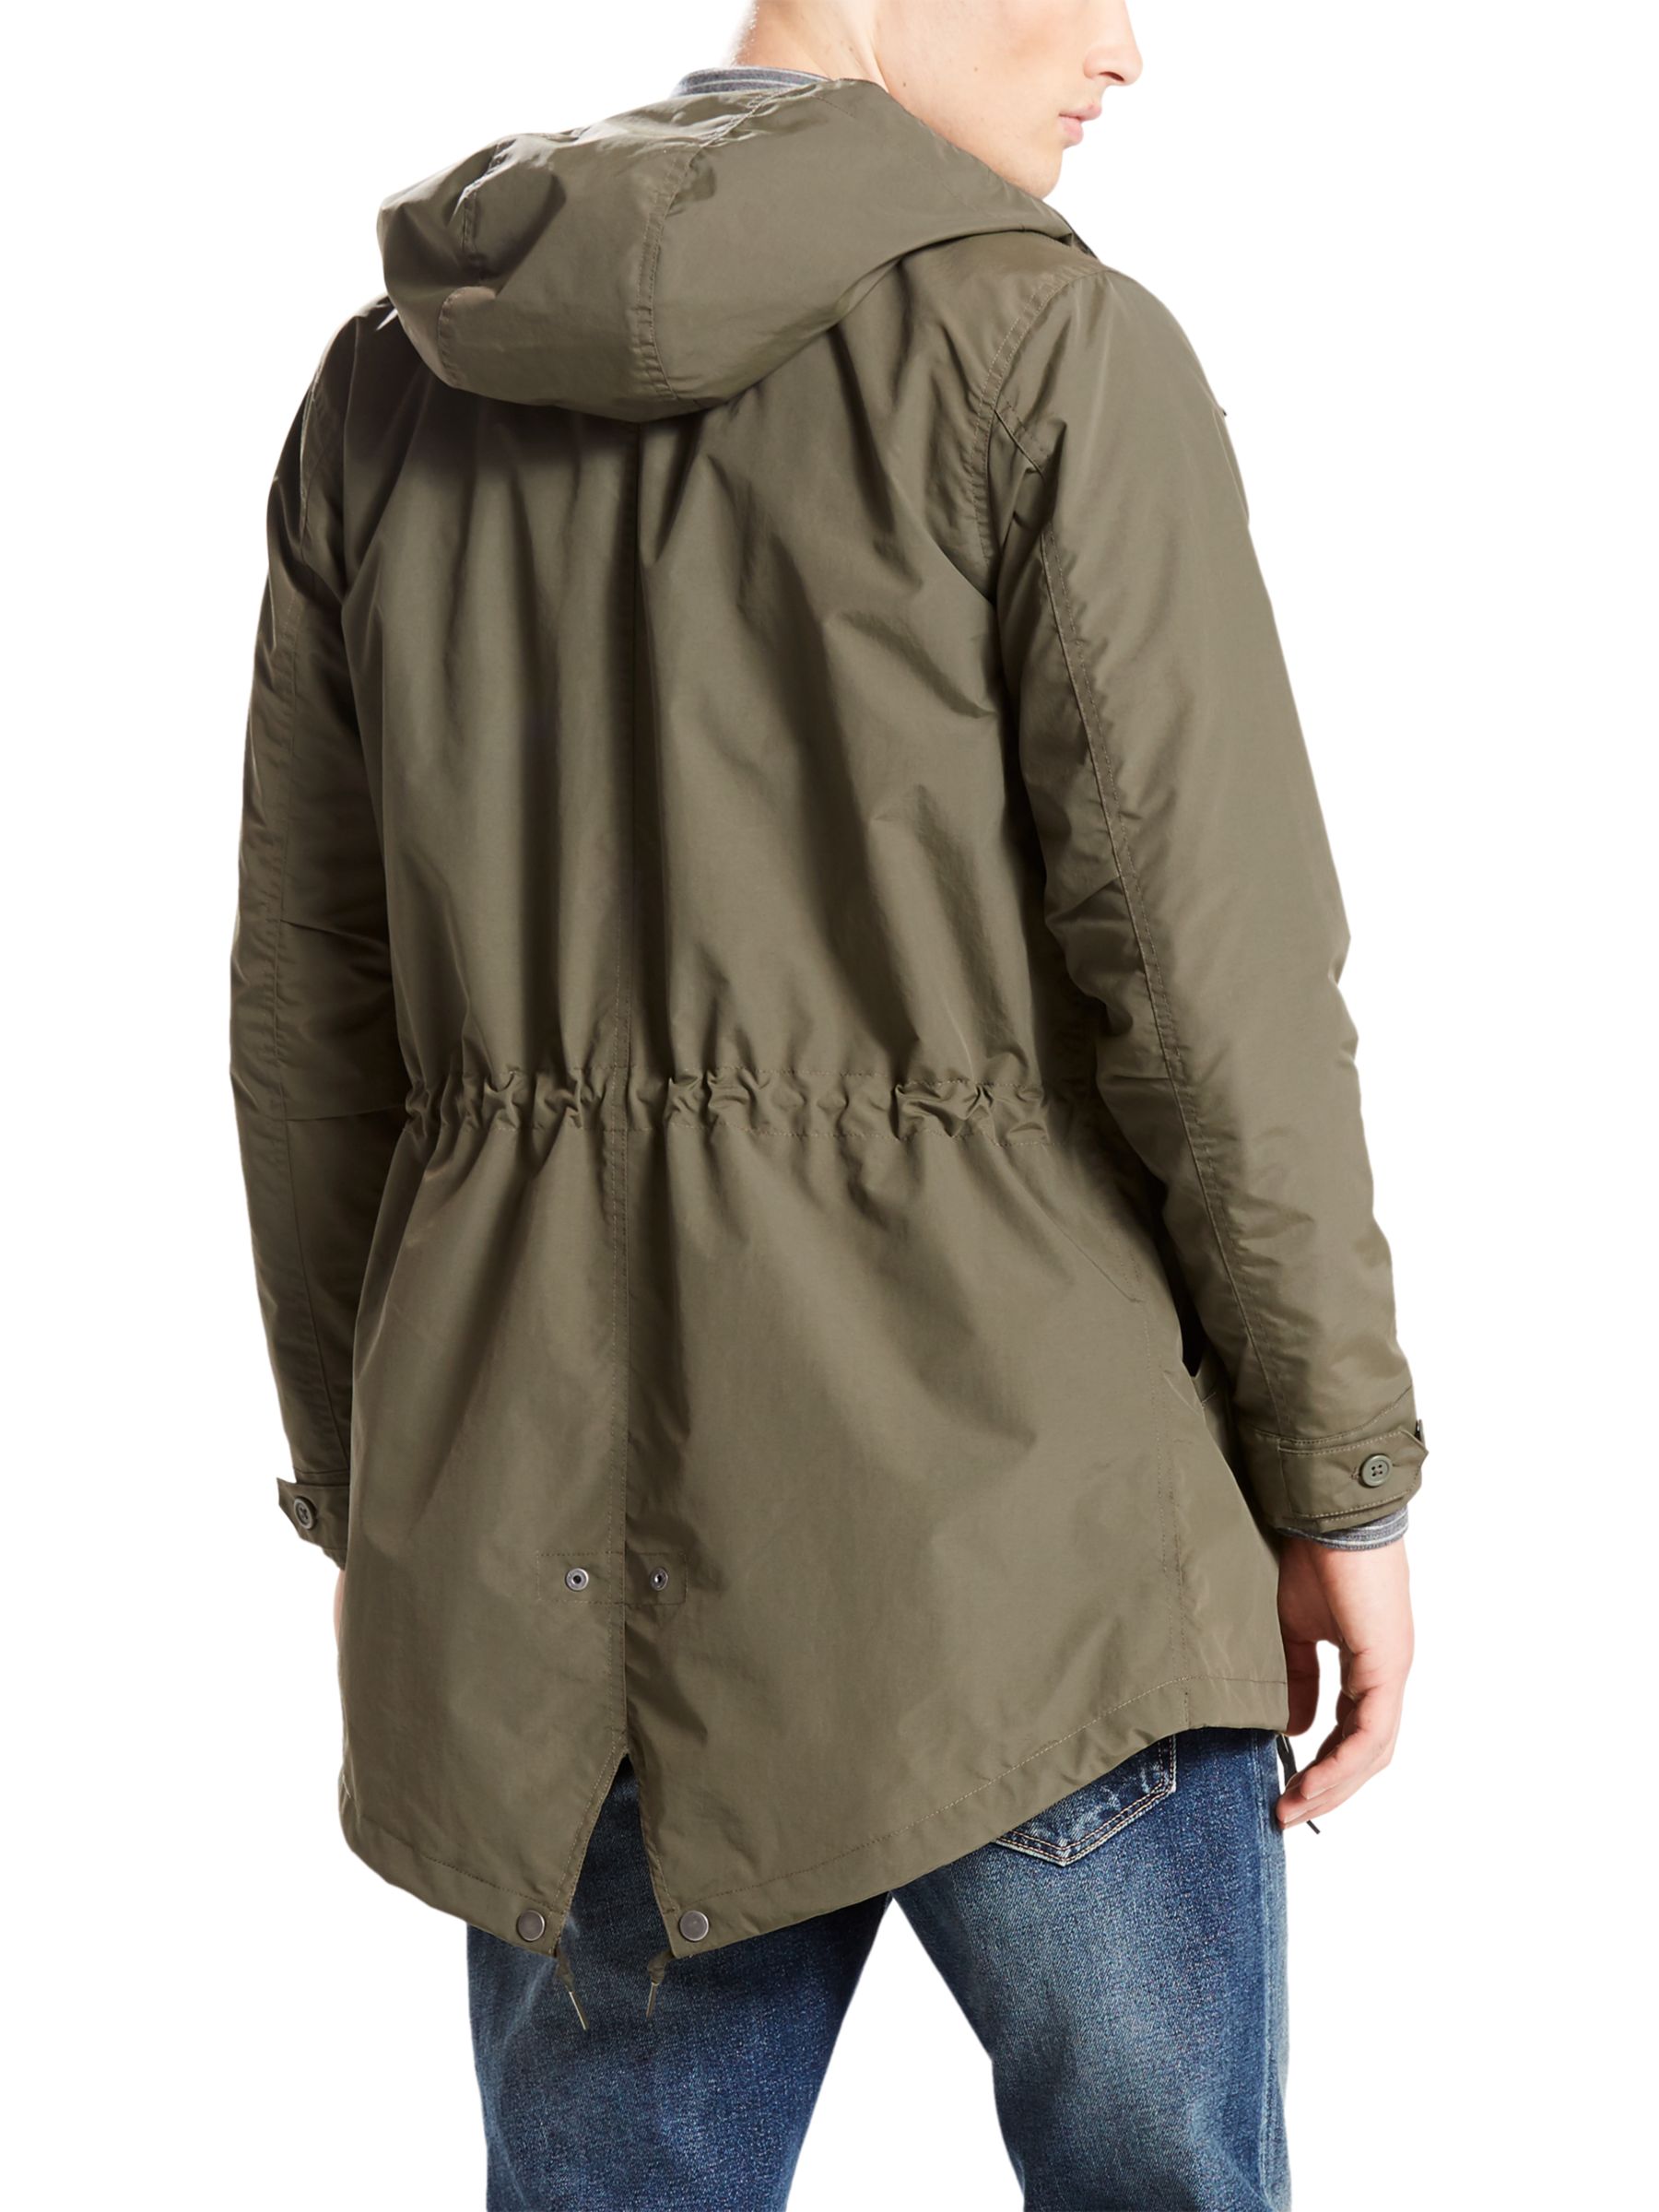 lined fishtail parka jacket levis